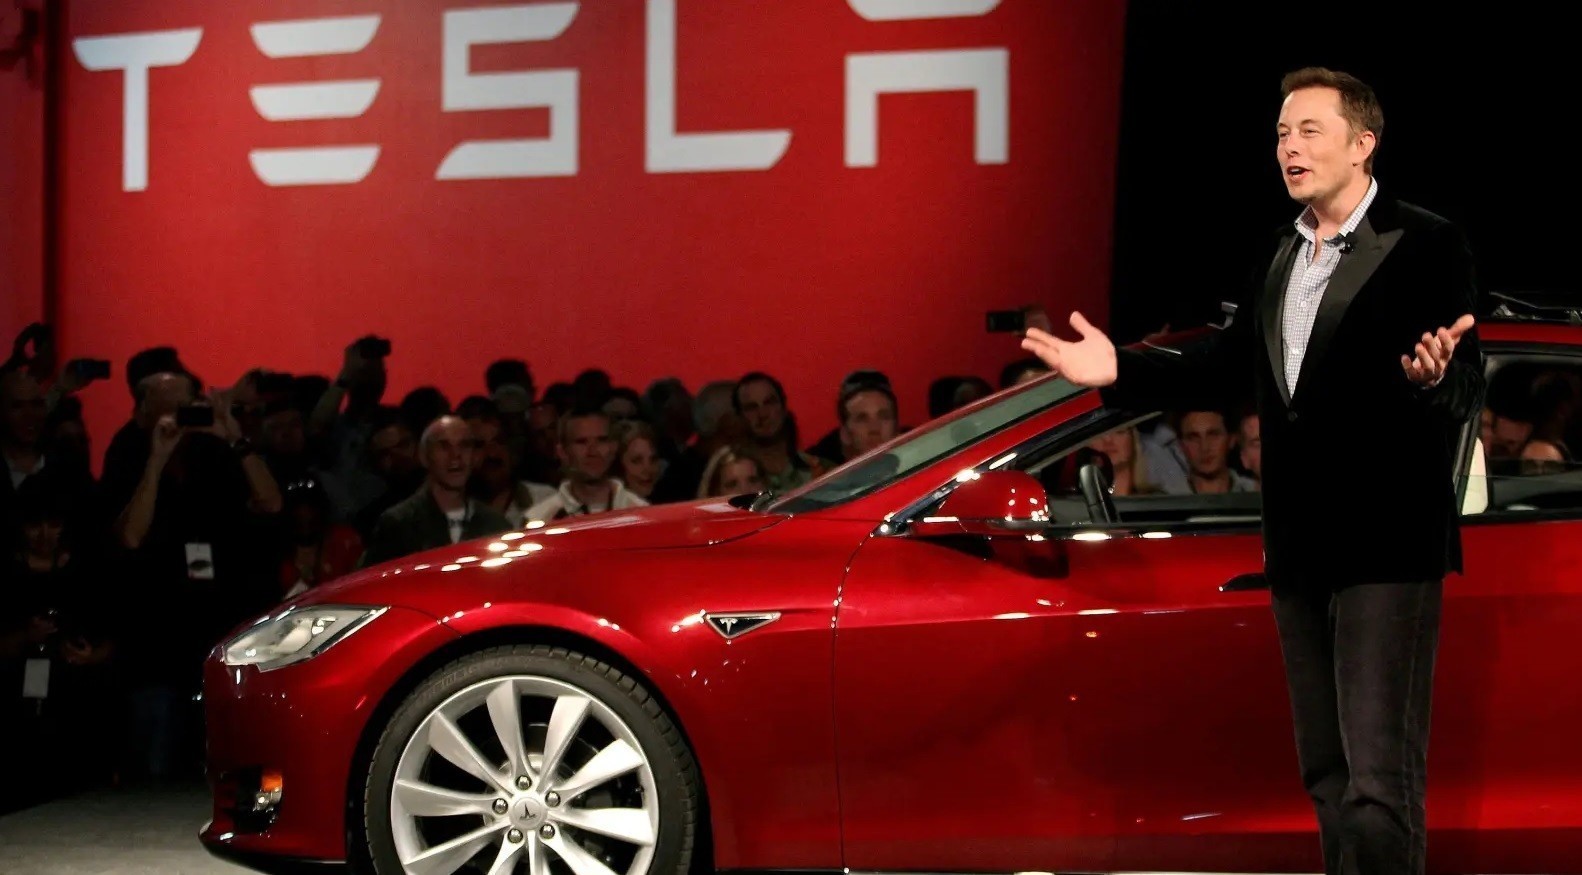 Mασκ: H Tesla θα βγει σύντομα από τον κυκεώνα της εφοδιαστικής αλυσίδας